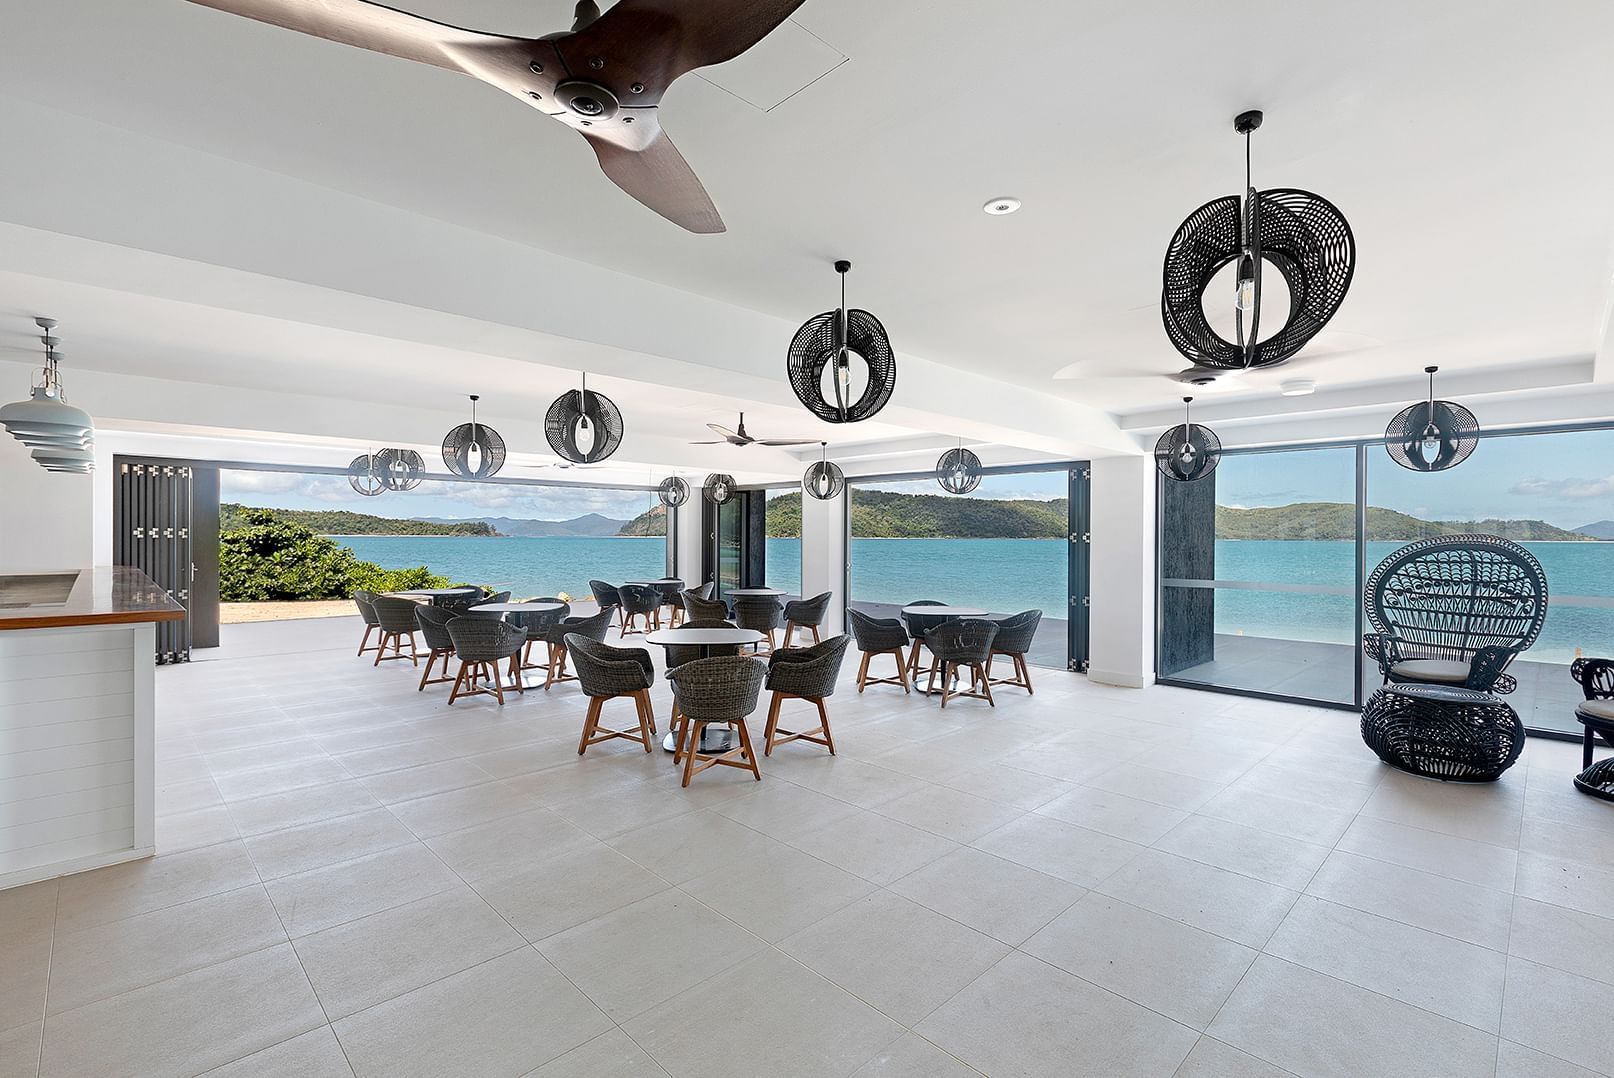 Interior of restaurant with sea views at Daydream Island Resort